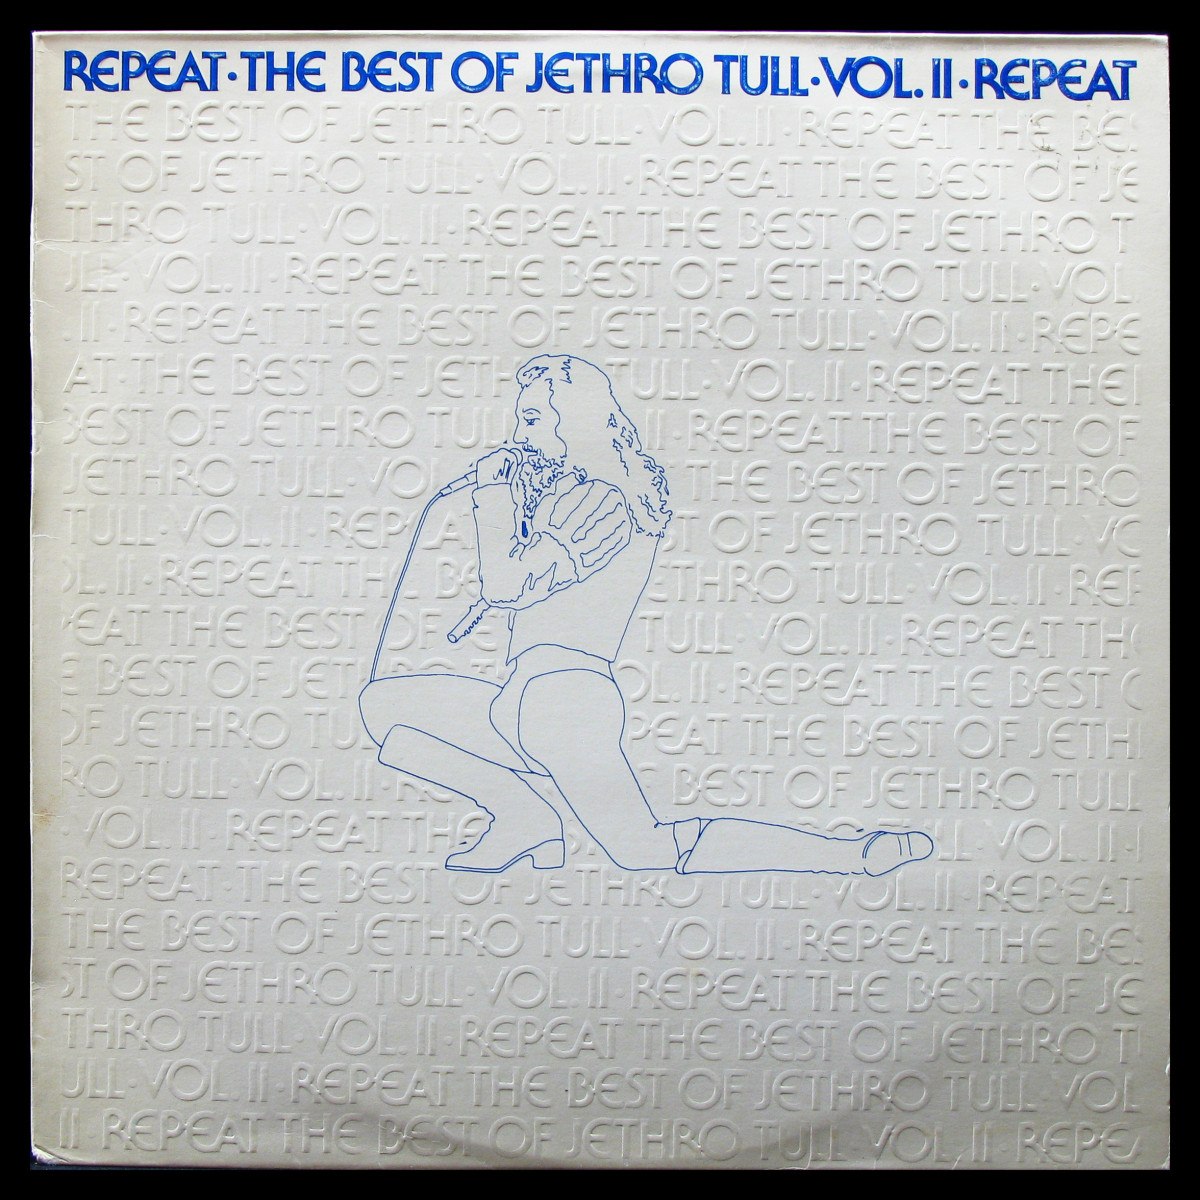 Repeat - The Best Of Jethro Tull Vol.II